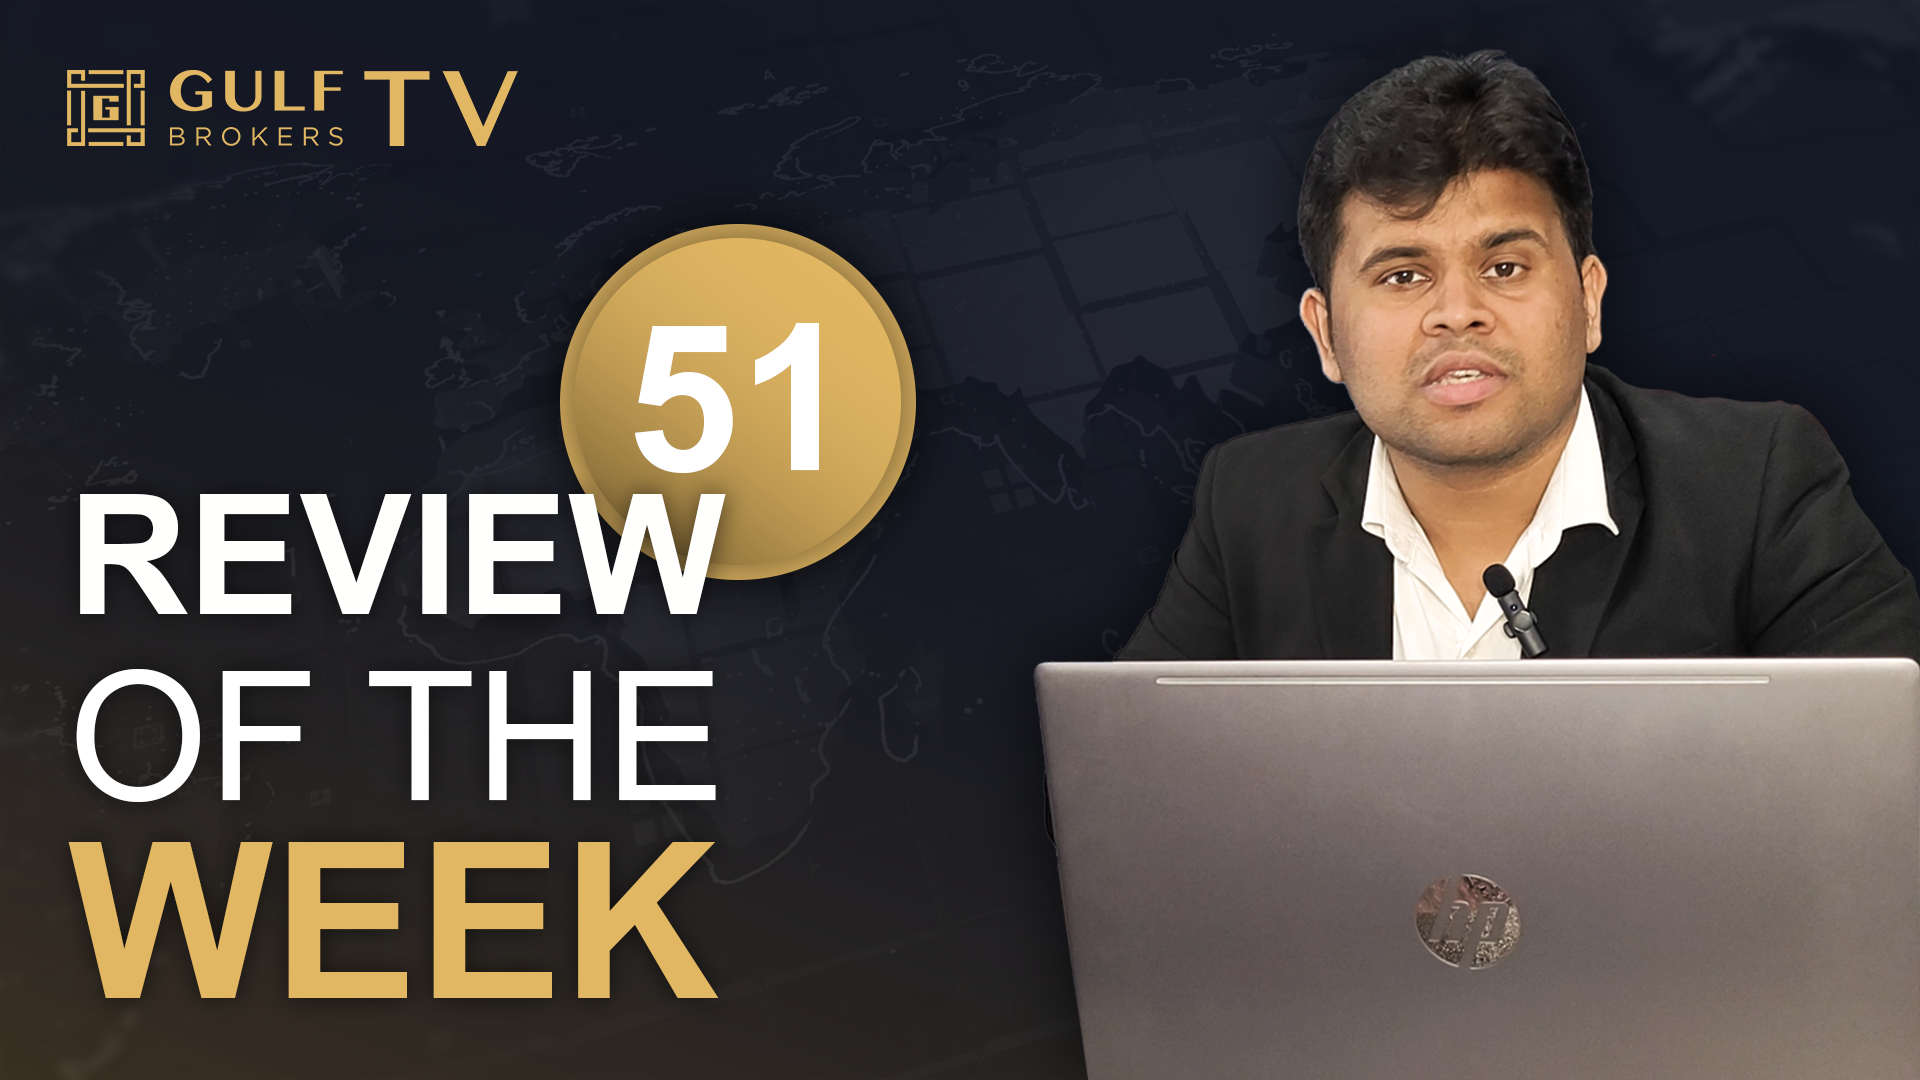 Gulfbrokers | Gulf Brokers | Review of the week 51 | Syam KP